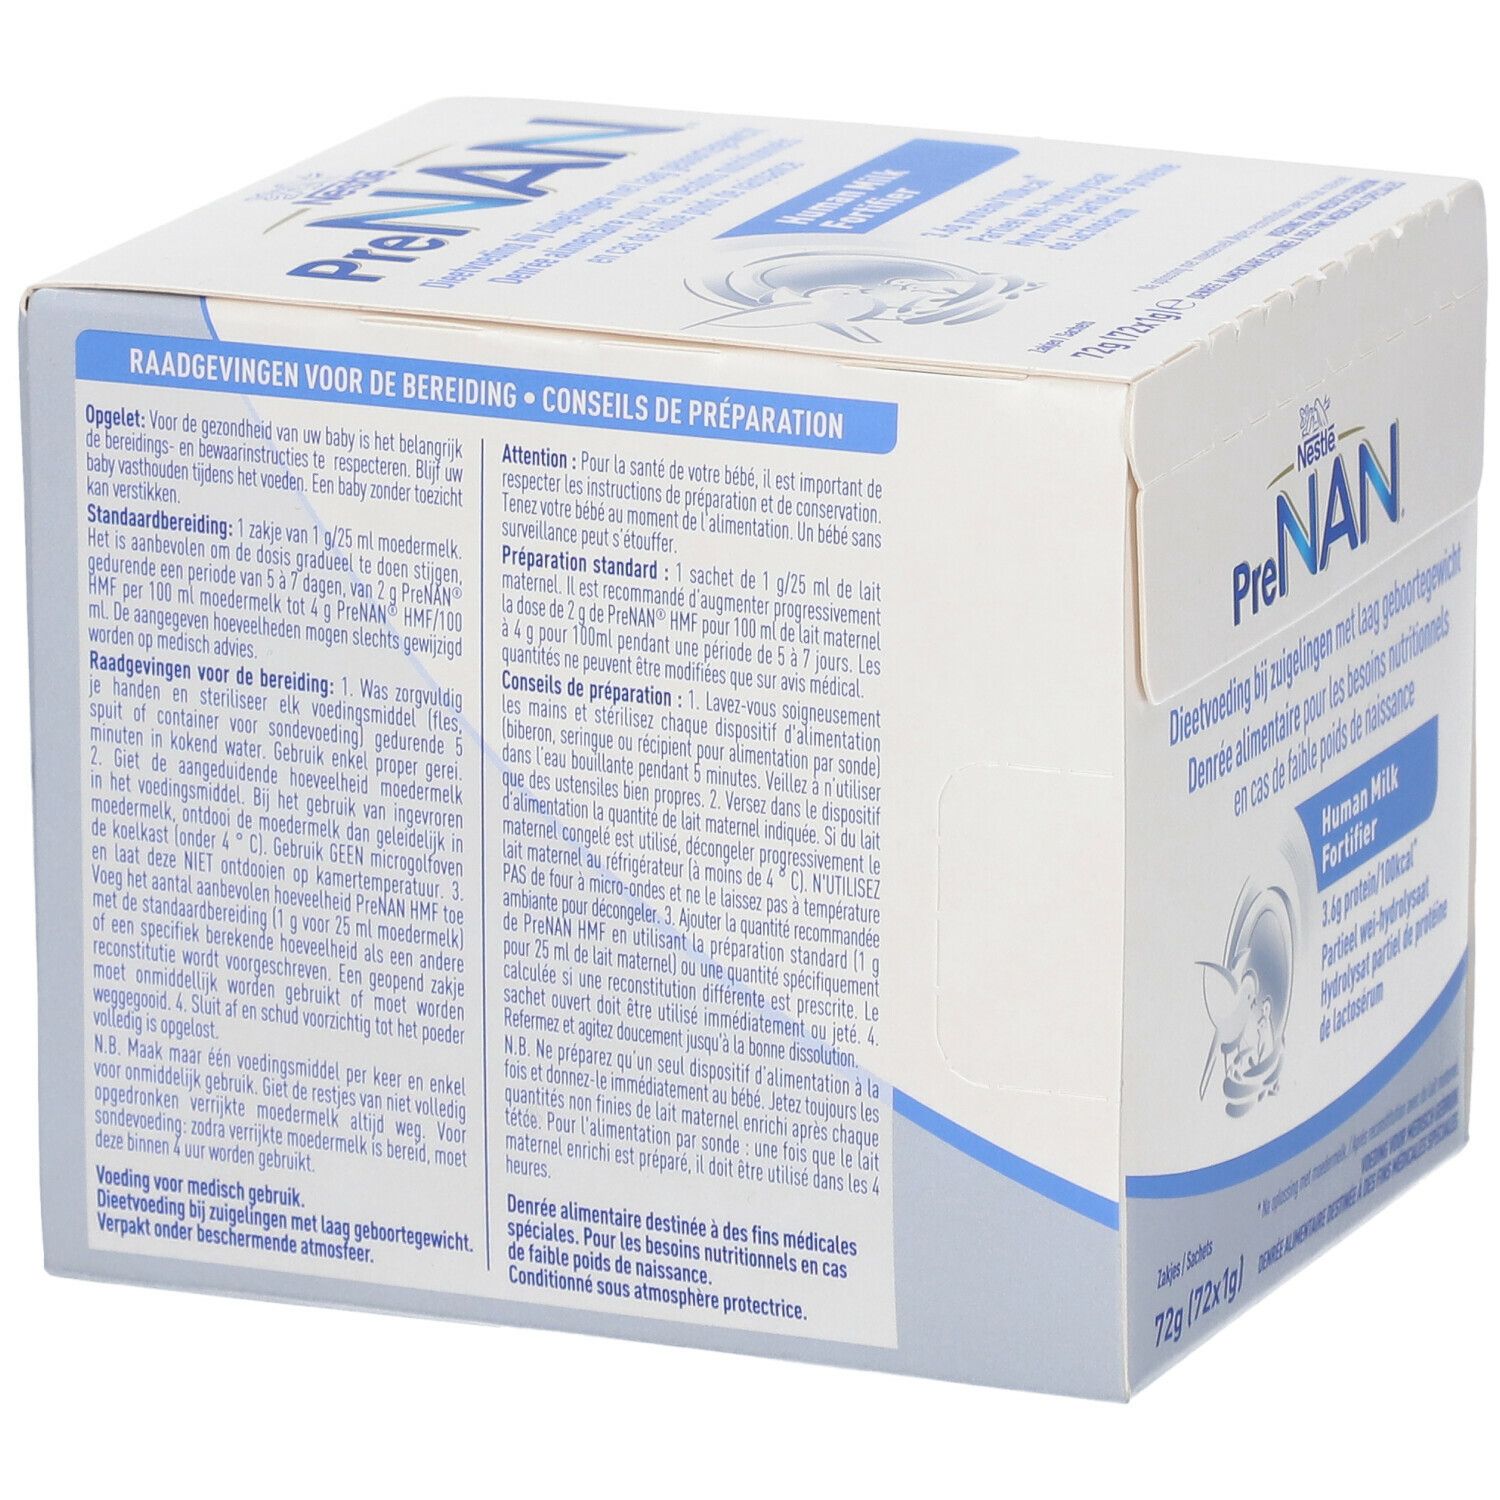 Nestlé® PreNAN Human Milk Fortifier